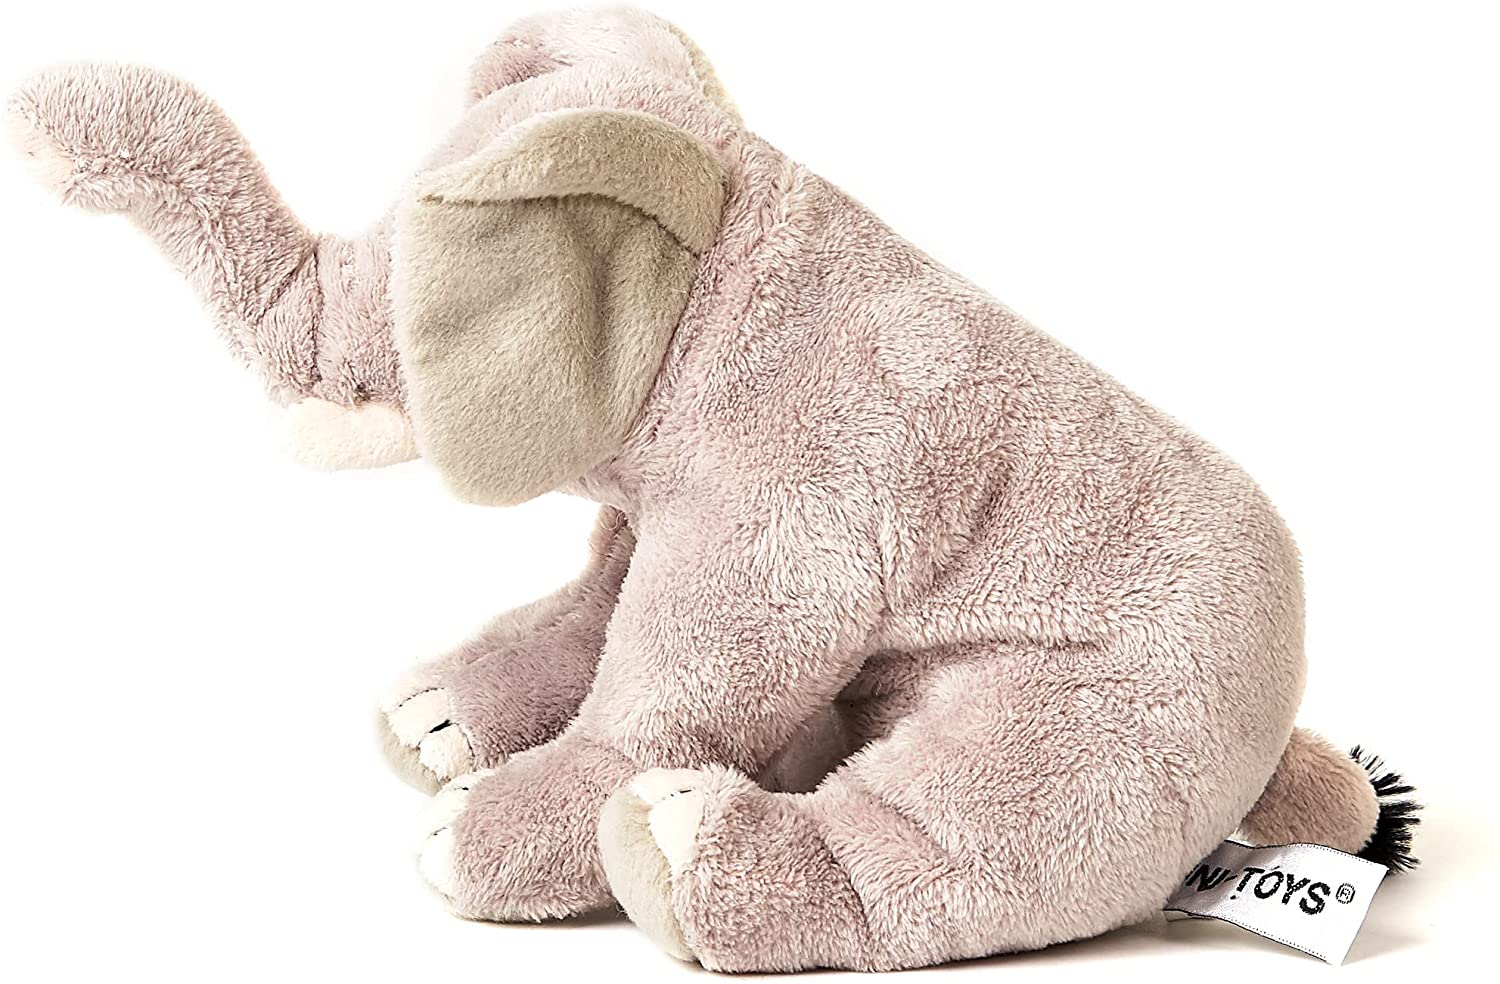 Uni-Toys - Elefant, sitzend - 14 cm (Höhe) - Plüsch-Elefant - Plüschtier, Kuscheltier 